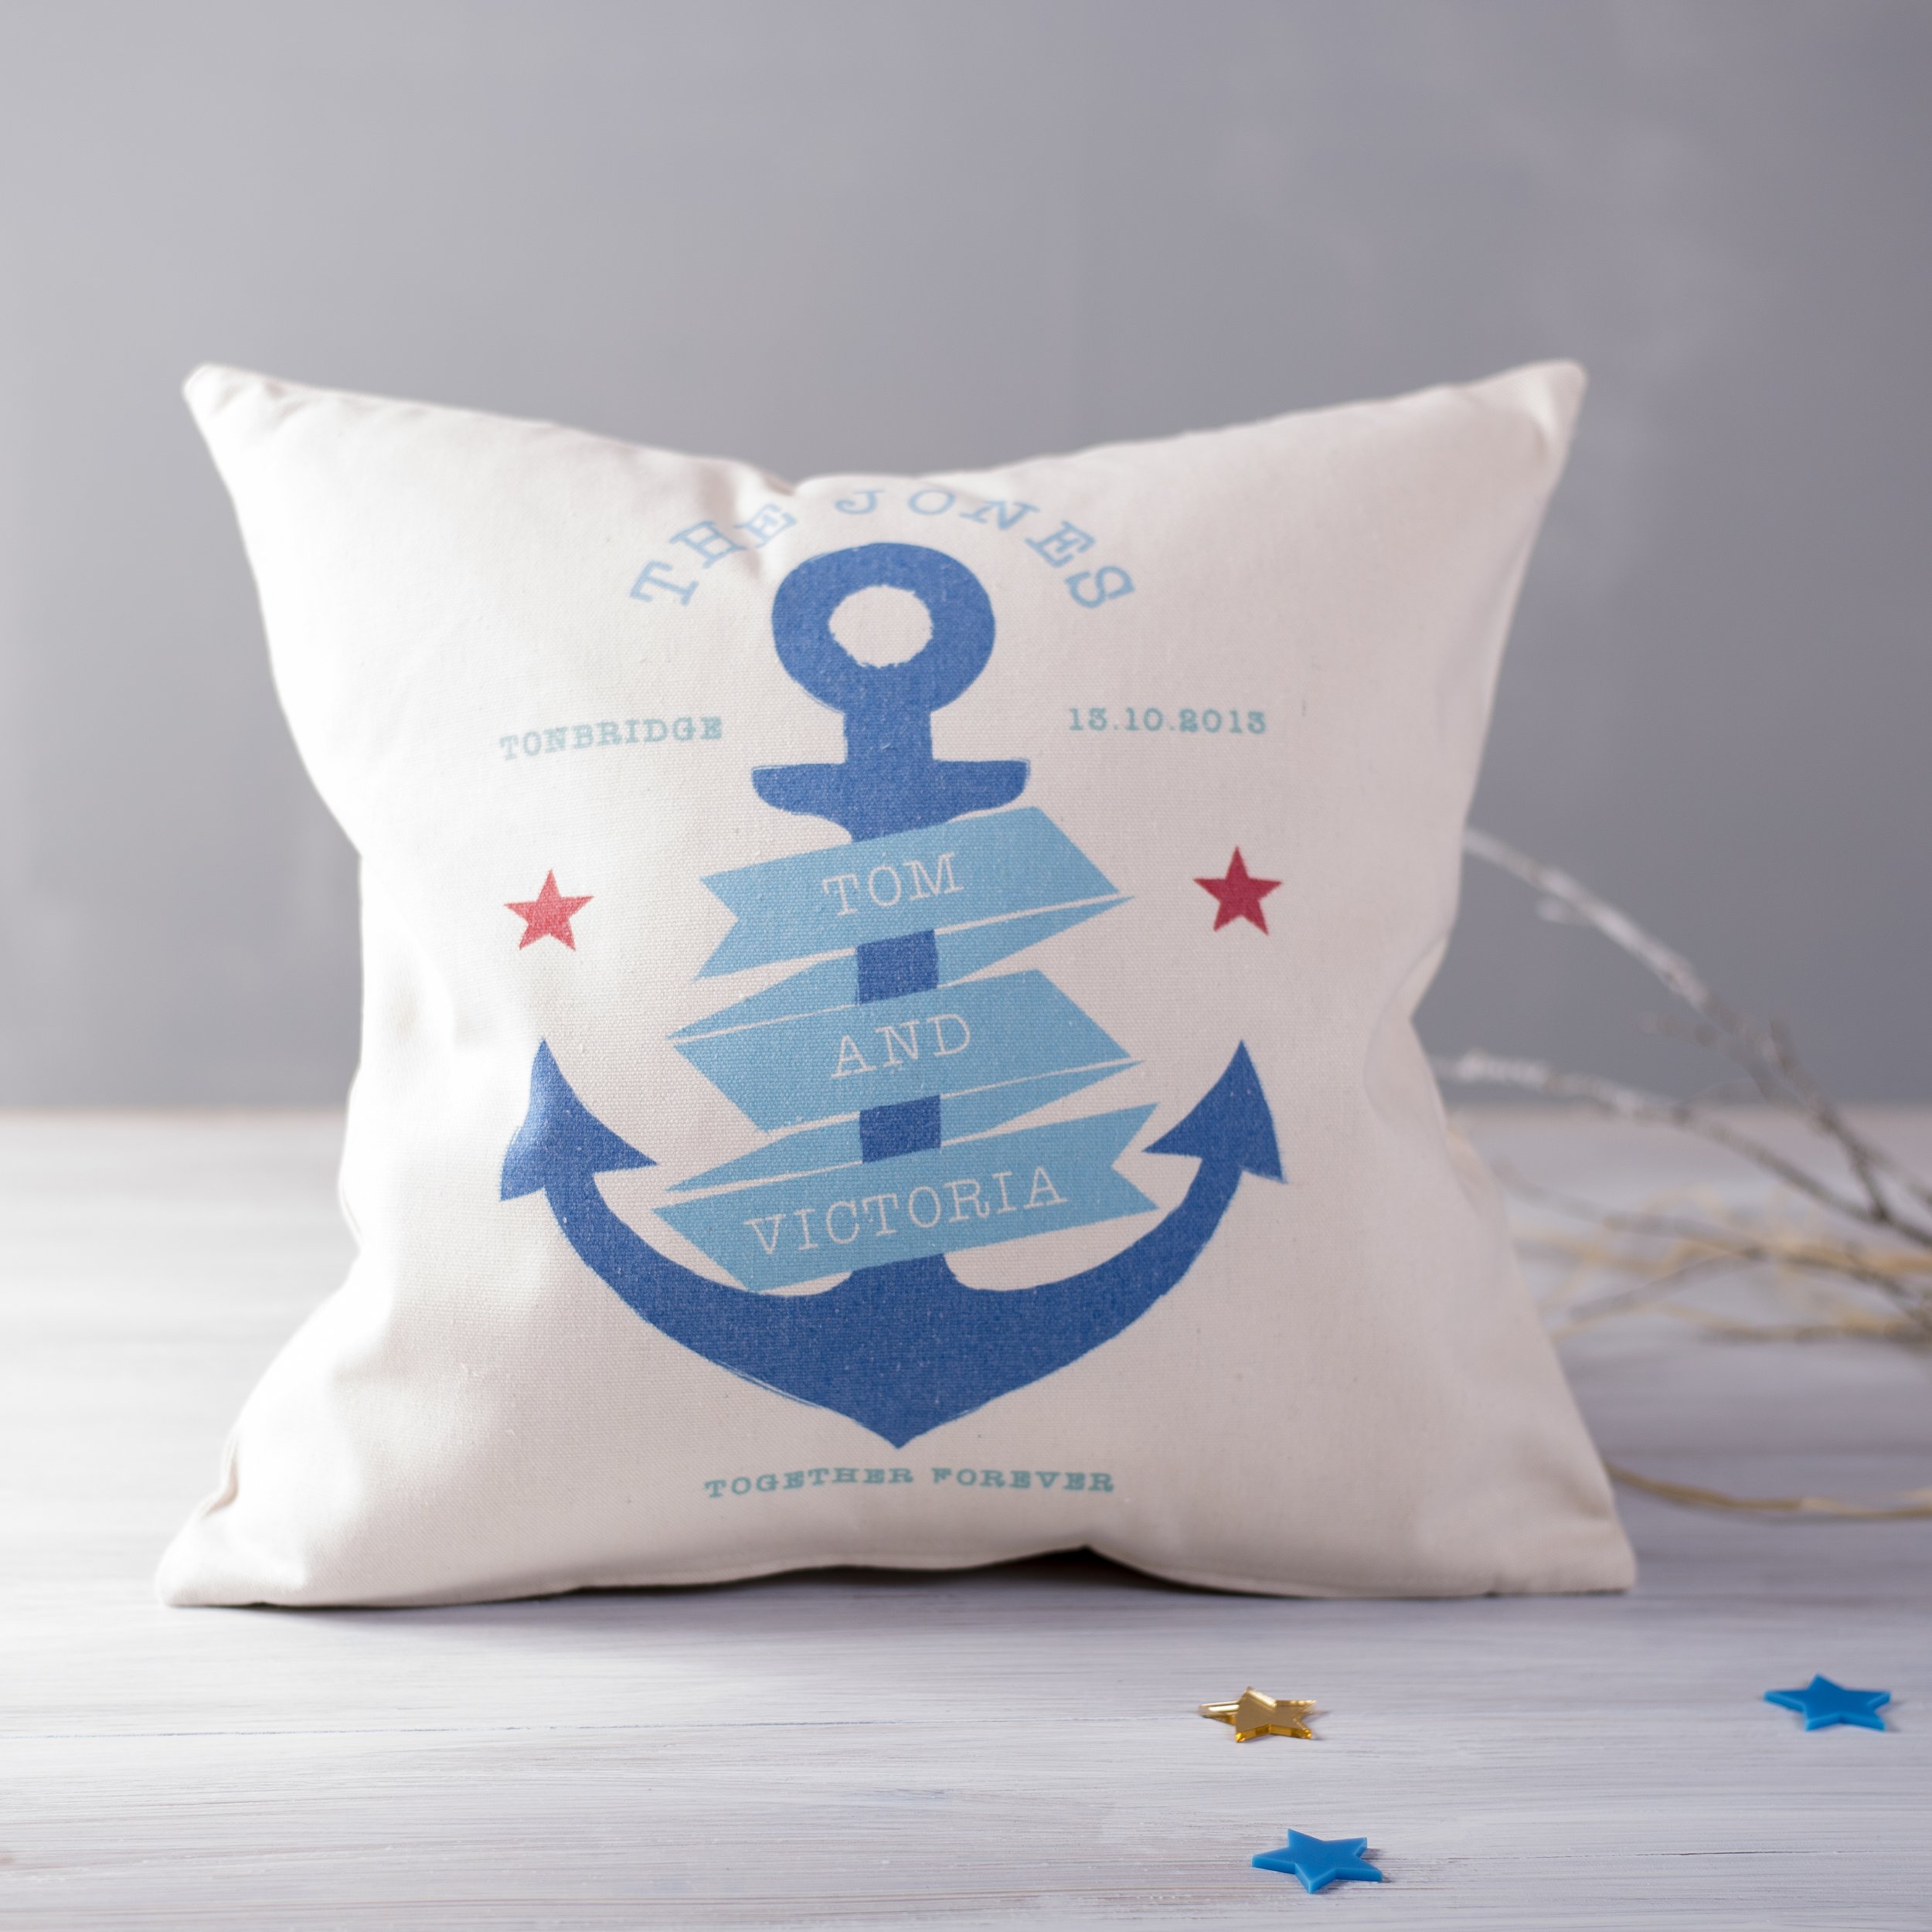 5.OAKDENE DESIGNS Personalised Nautical Couples Cushion €34.99